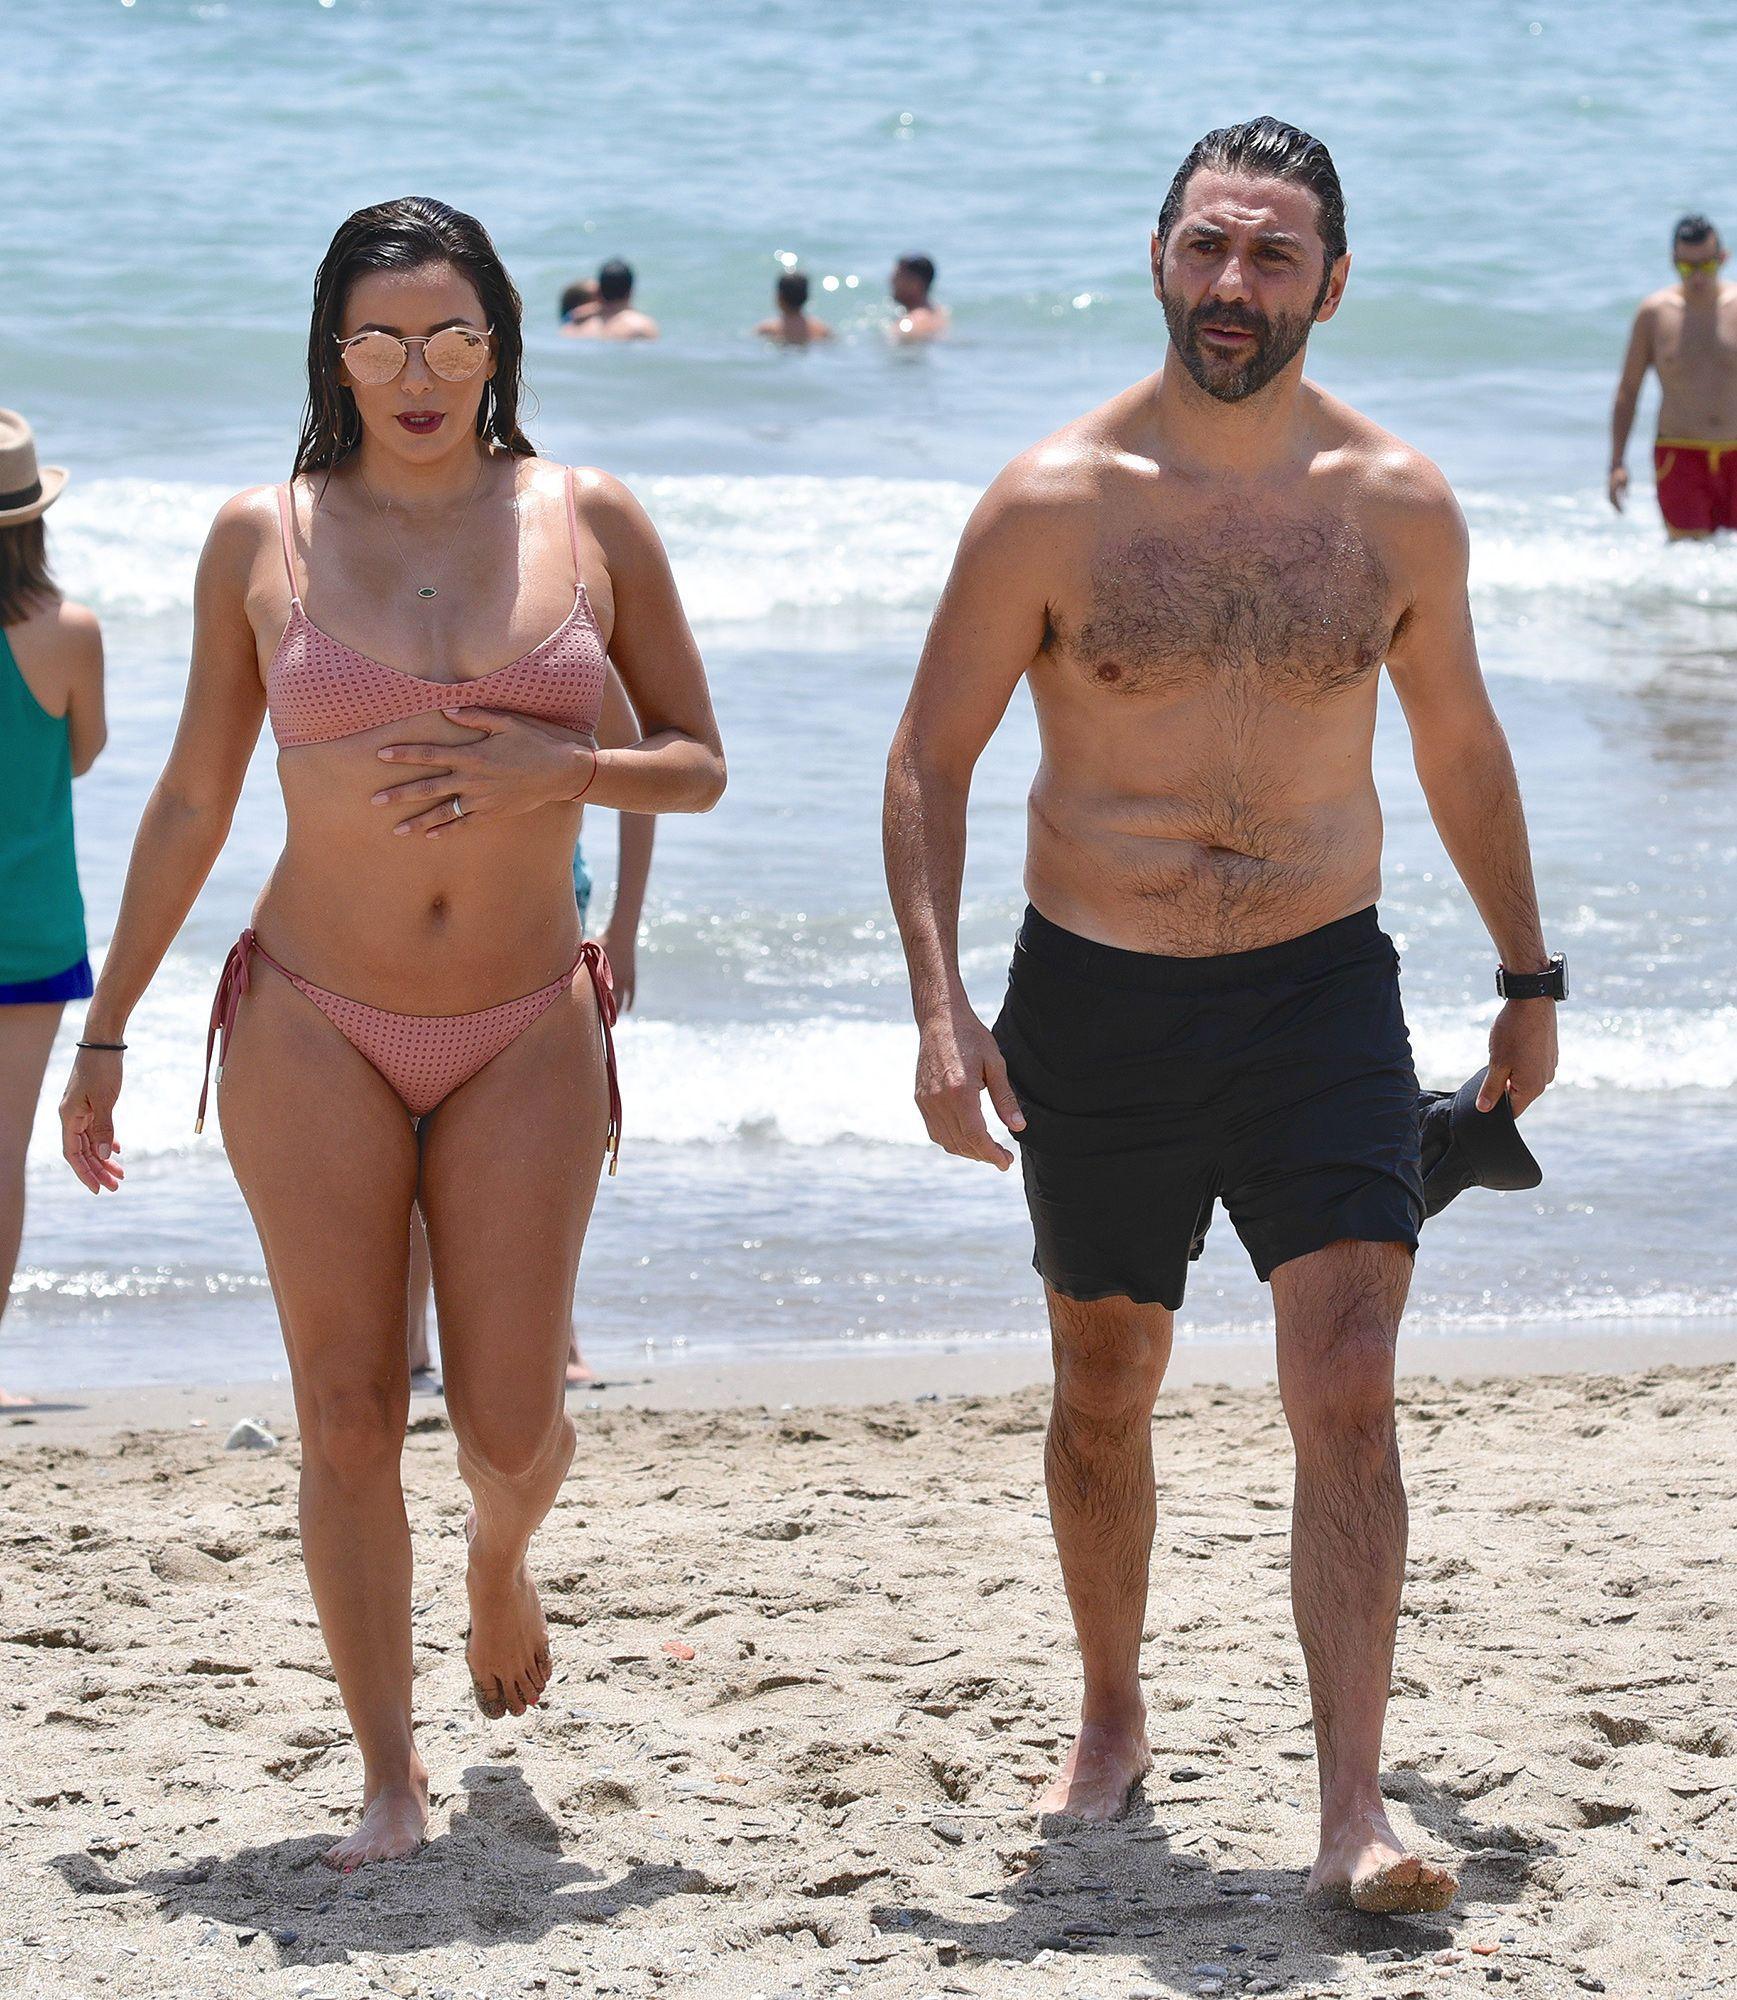 Nikki Brazil naked on the beach.